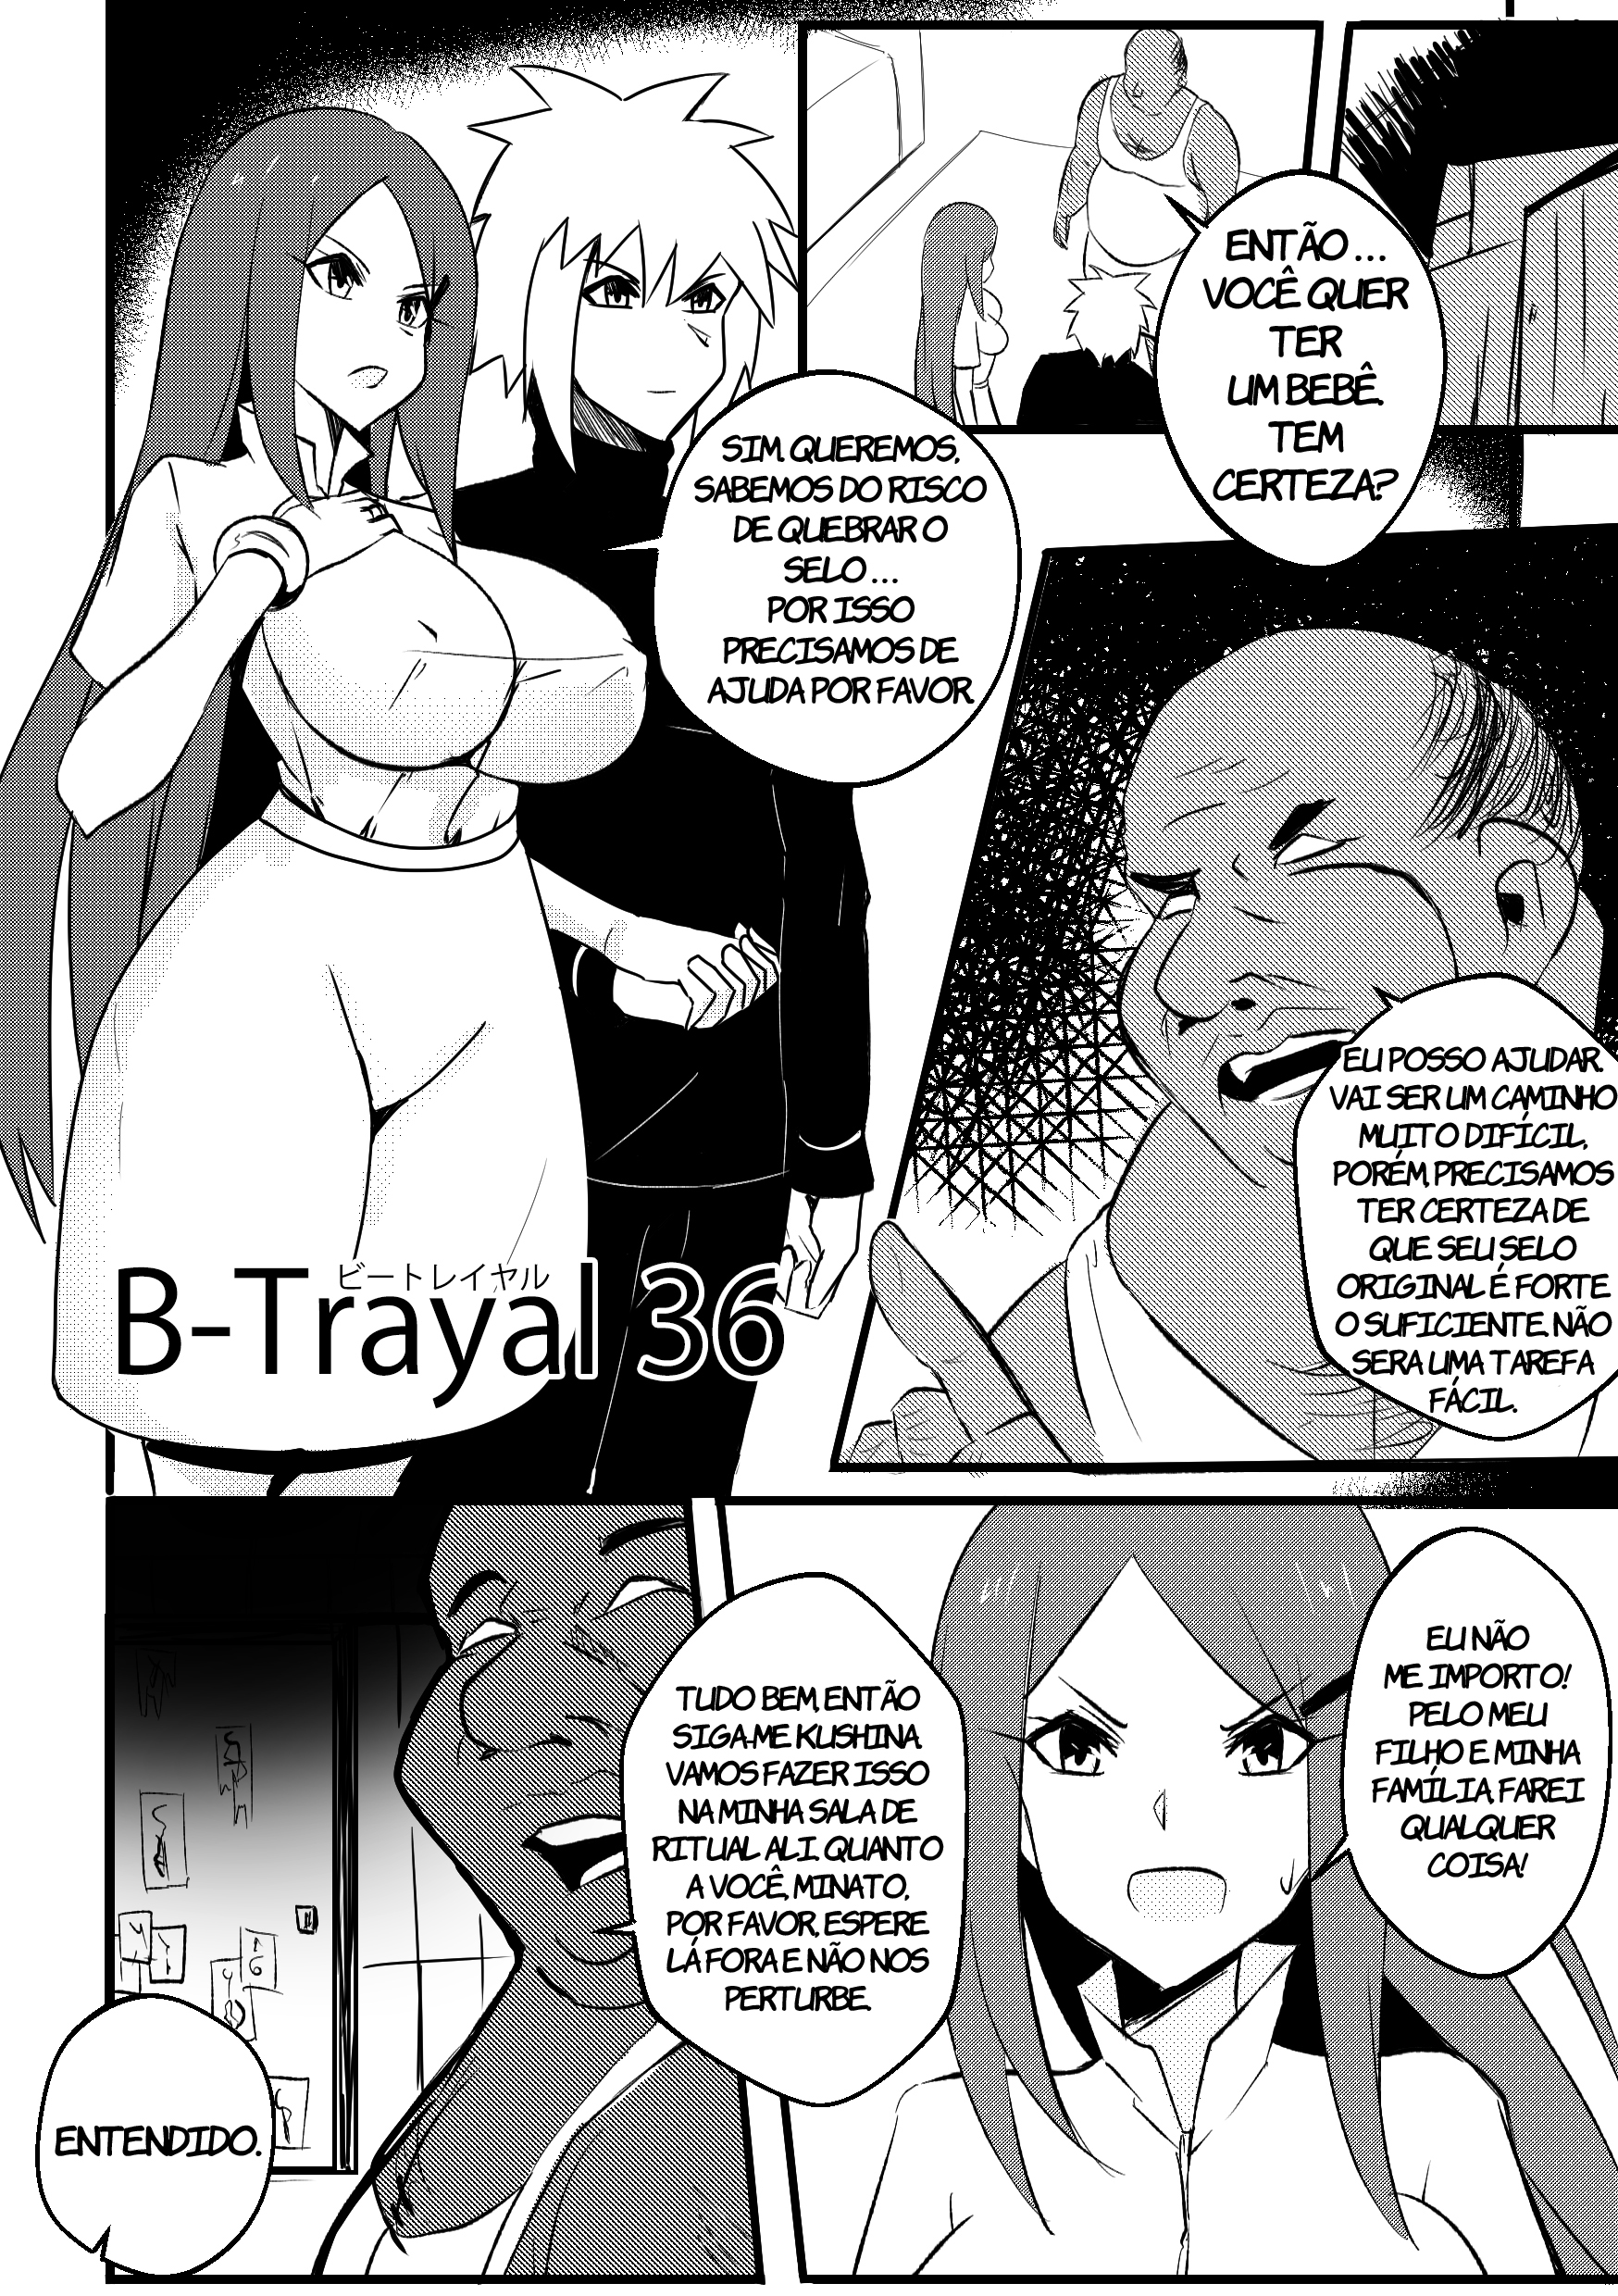 B-Trayal 36 - Foto 3